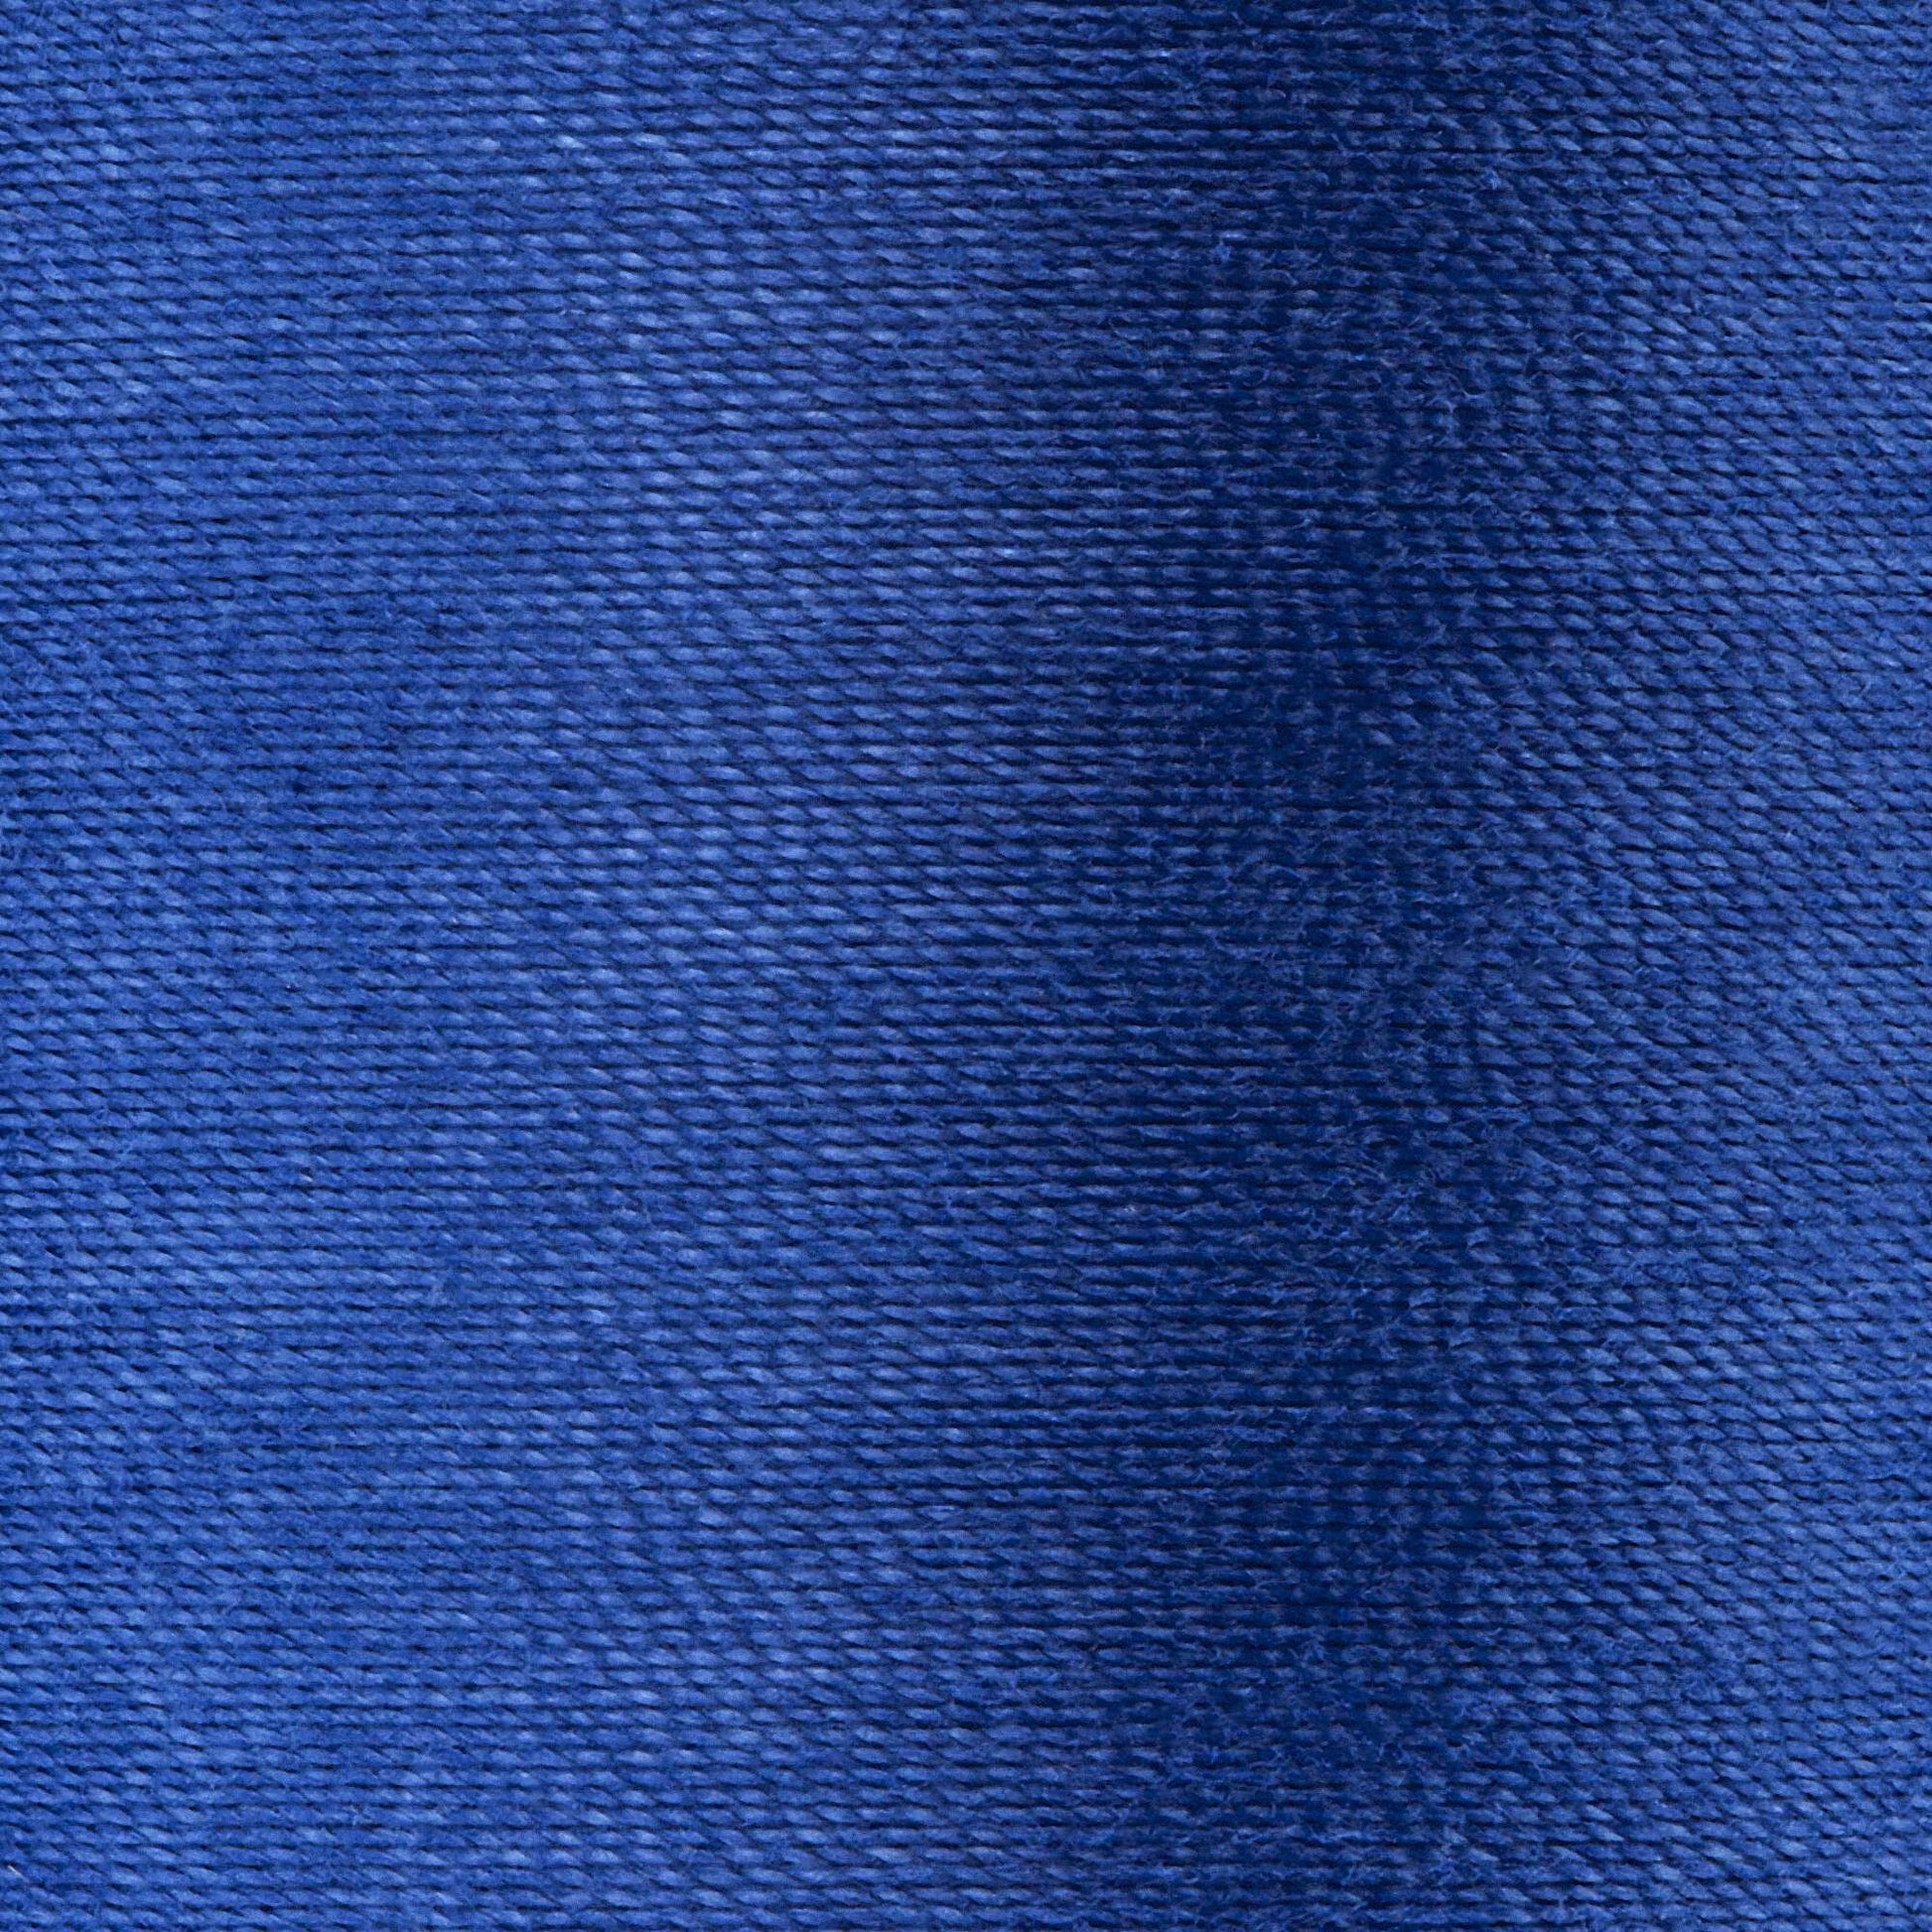 Coats & Clark All Purpose Thread (500 Yards) Yale Blue